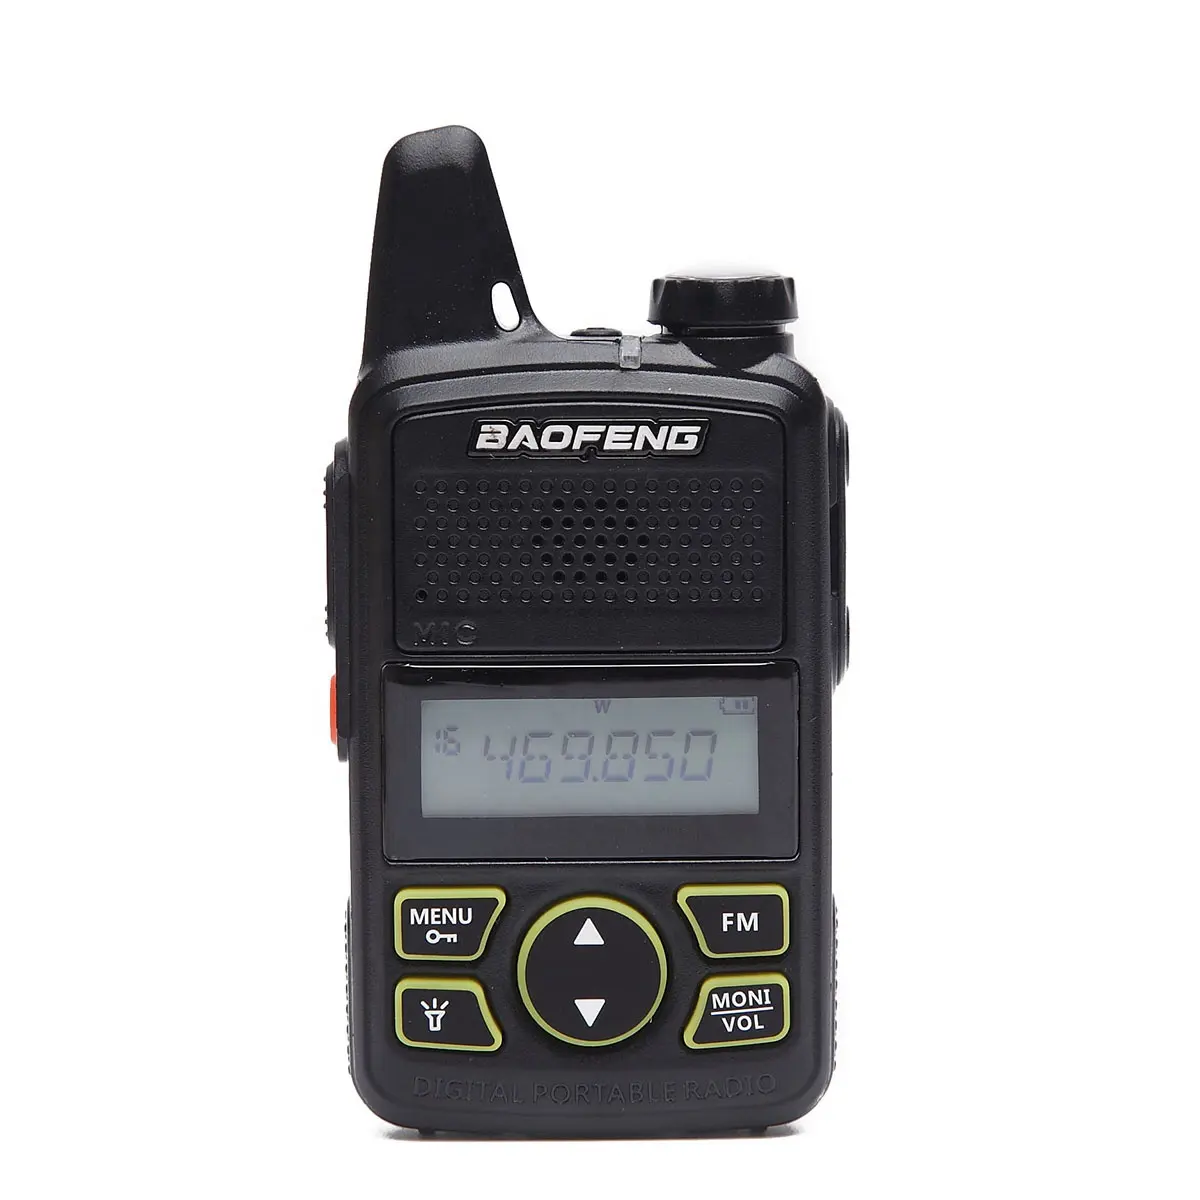 Baofeng BF-T1 سوبر ميني هام راديو UHF 400-470mhz المحمولة اتجاهين راديو هام CB BF T1 جهاز لاسلكي محمول